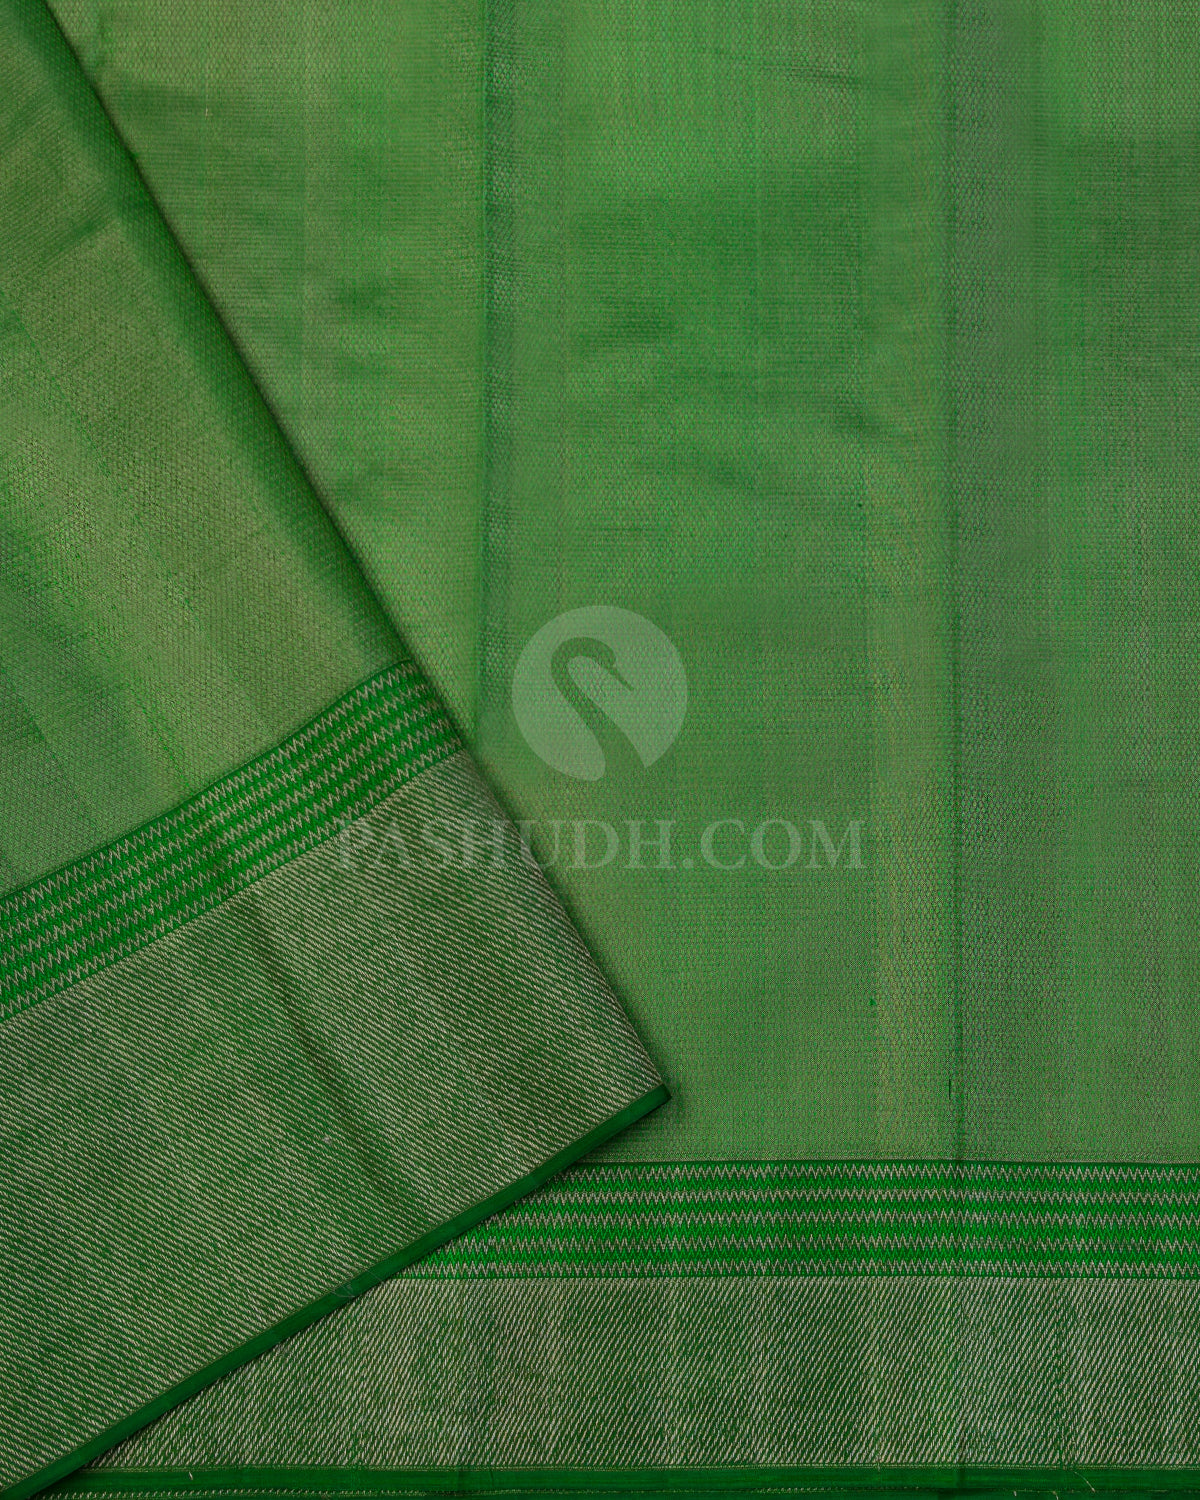 Indigo Blue and Dark Green Kanjivaram Silk Saree - D510(B) - View 2